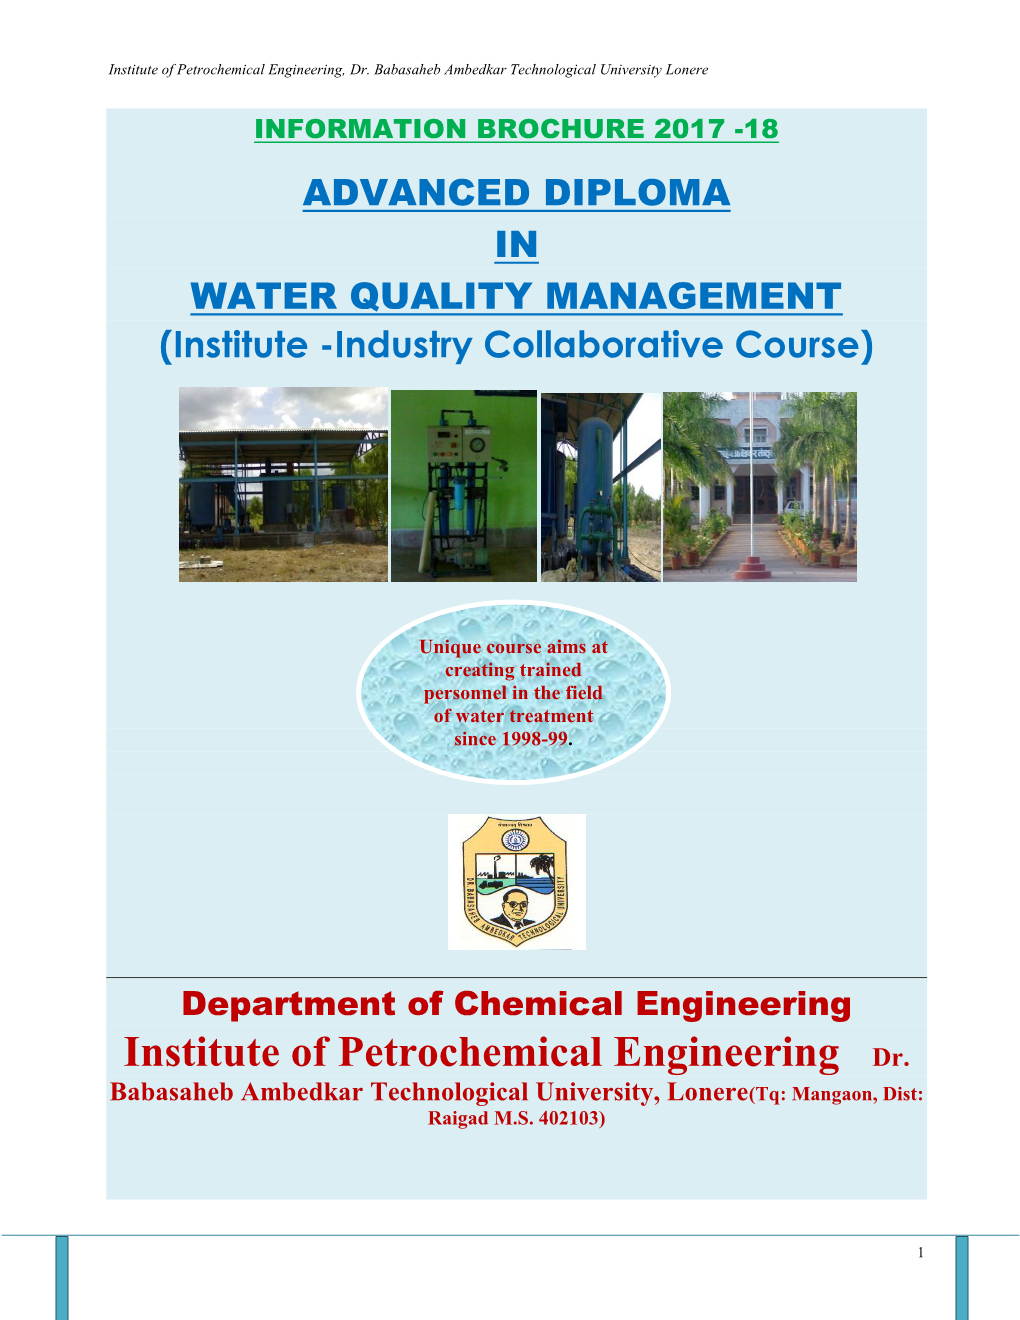 Institute of Petrochemical Engineering Dr. Babasaheb Ambedkar Technological University, Lonere(Tq: Mangaon, Dist: Raigad M.S